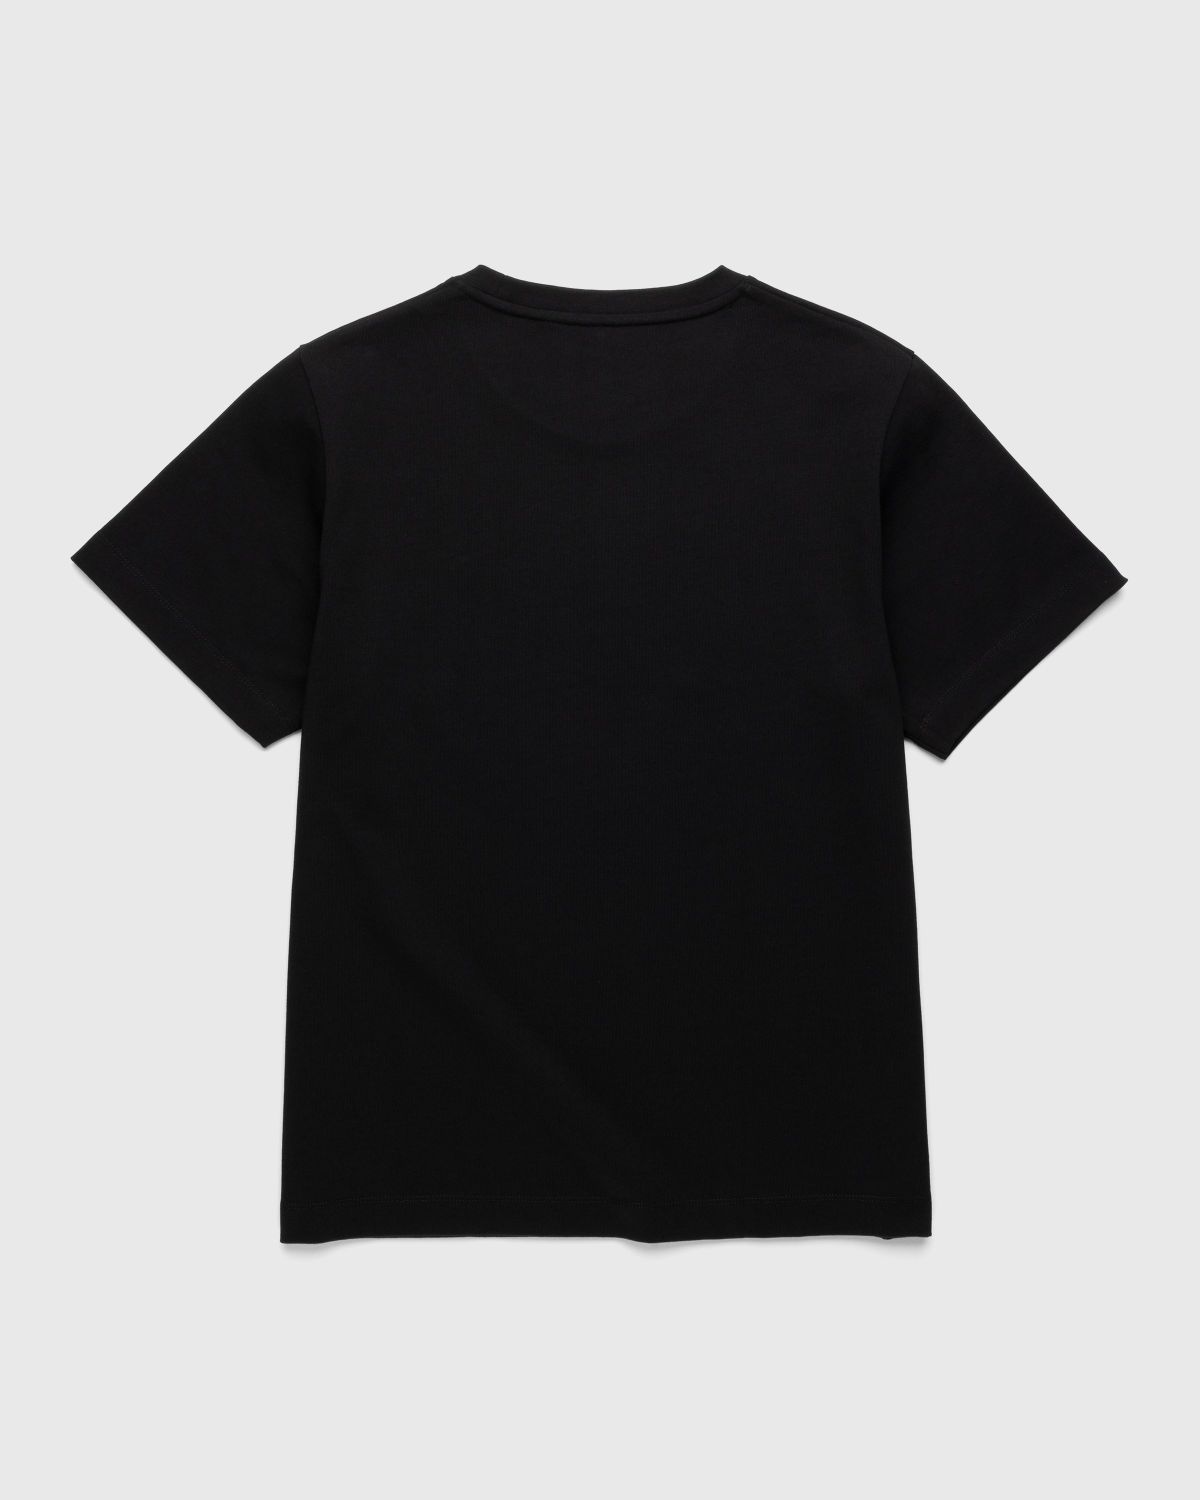 Marine Serre – Organic Cotton T-Shirt Black - Tops - Black - Image 3